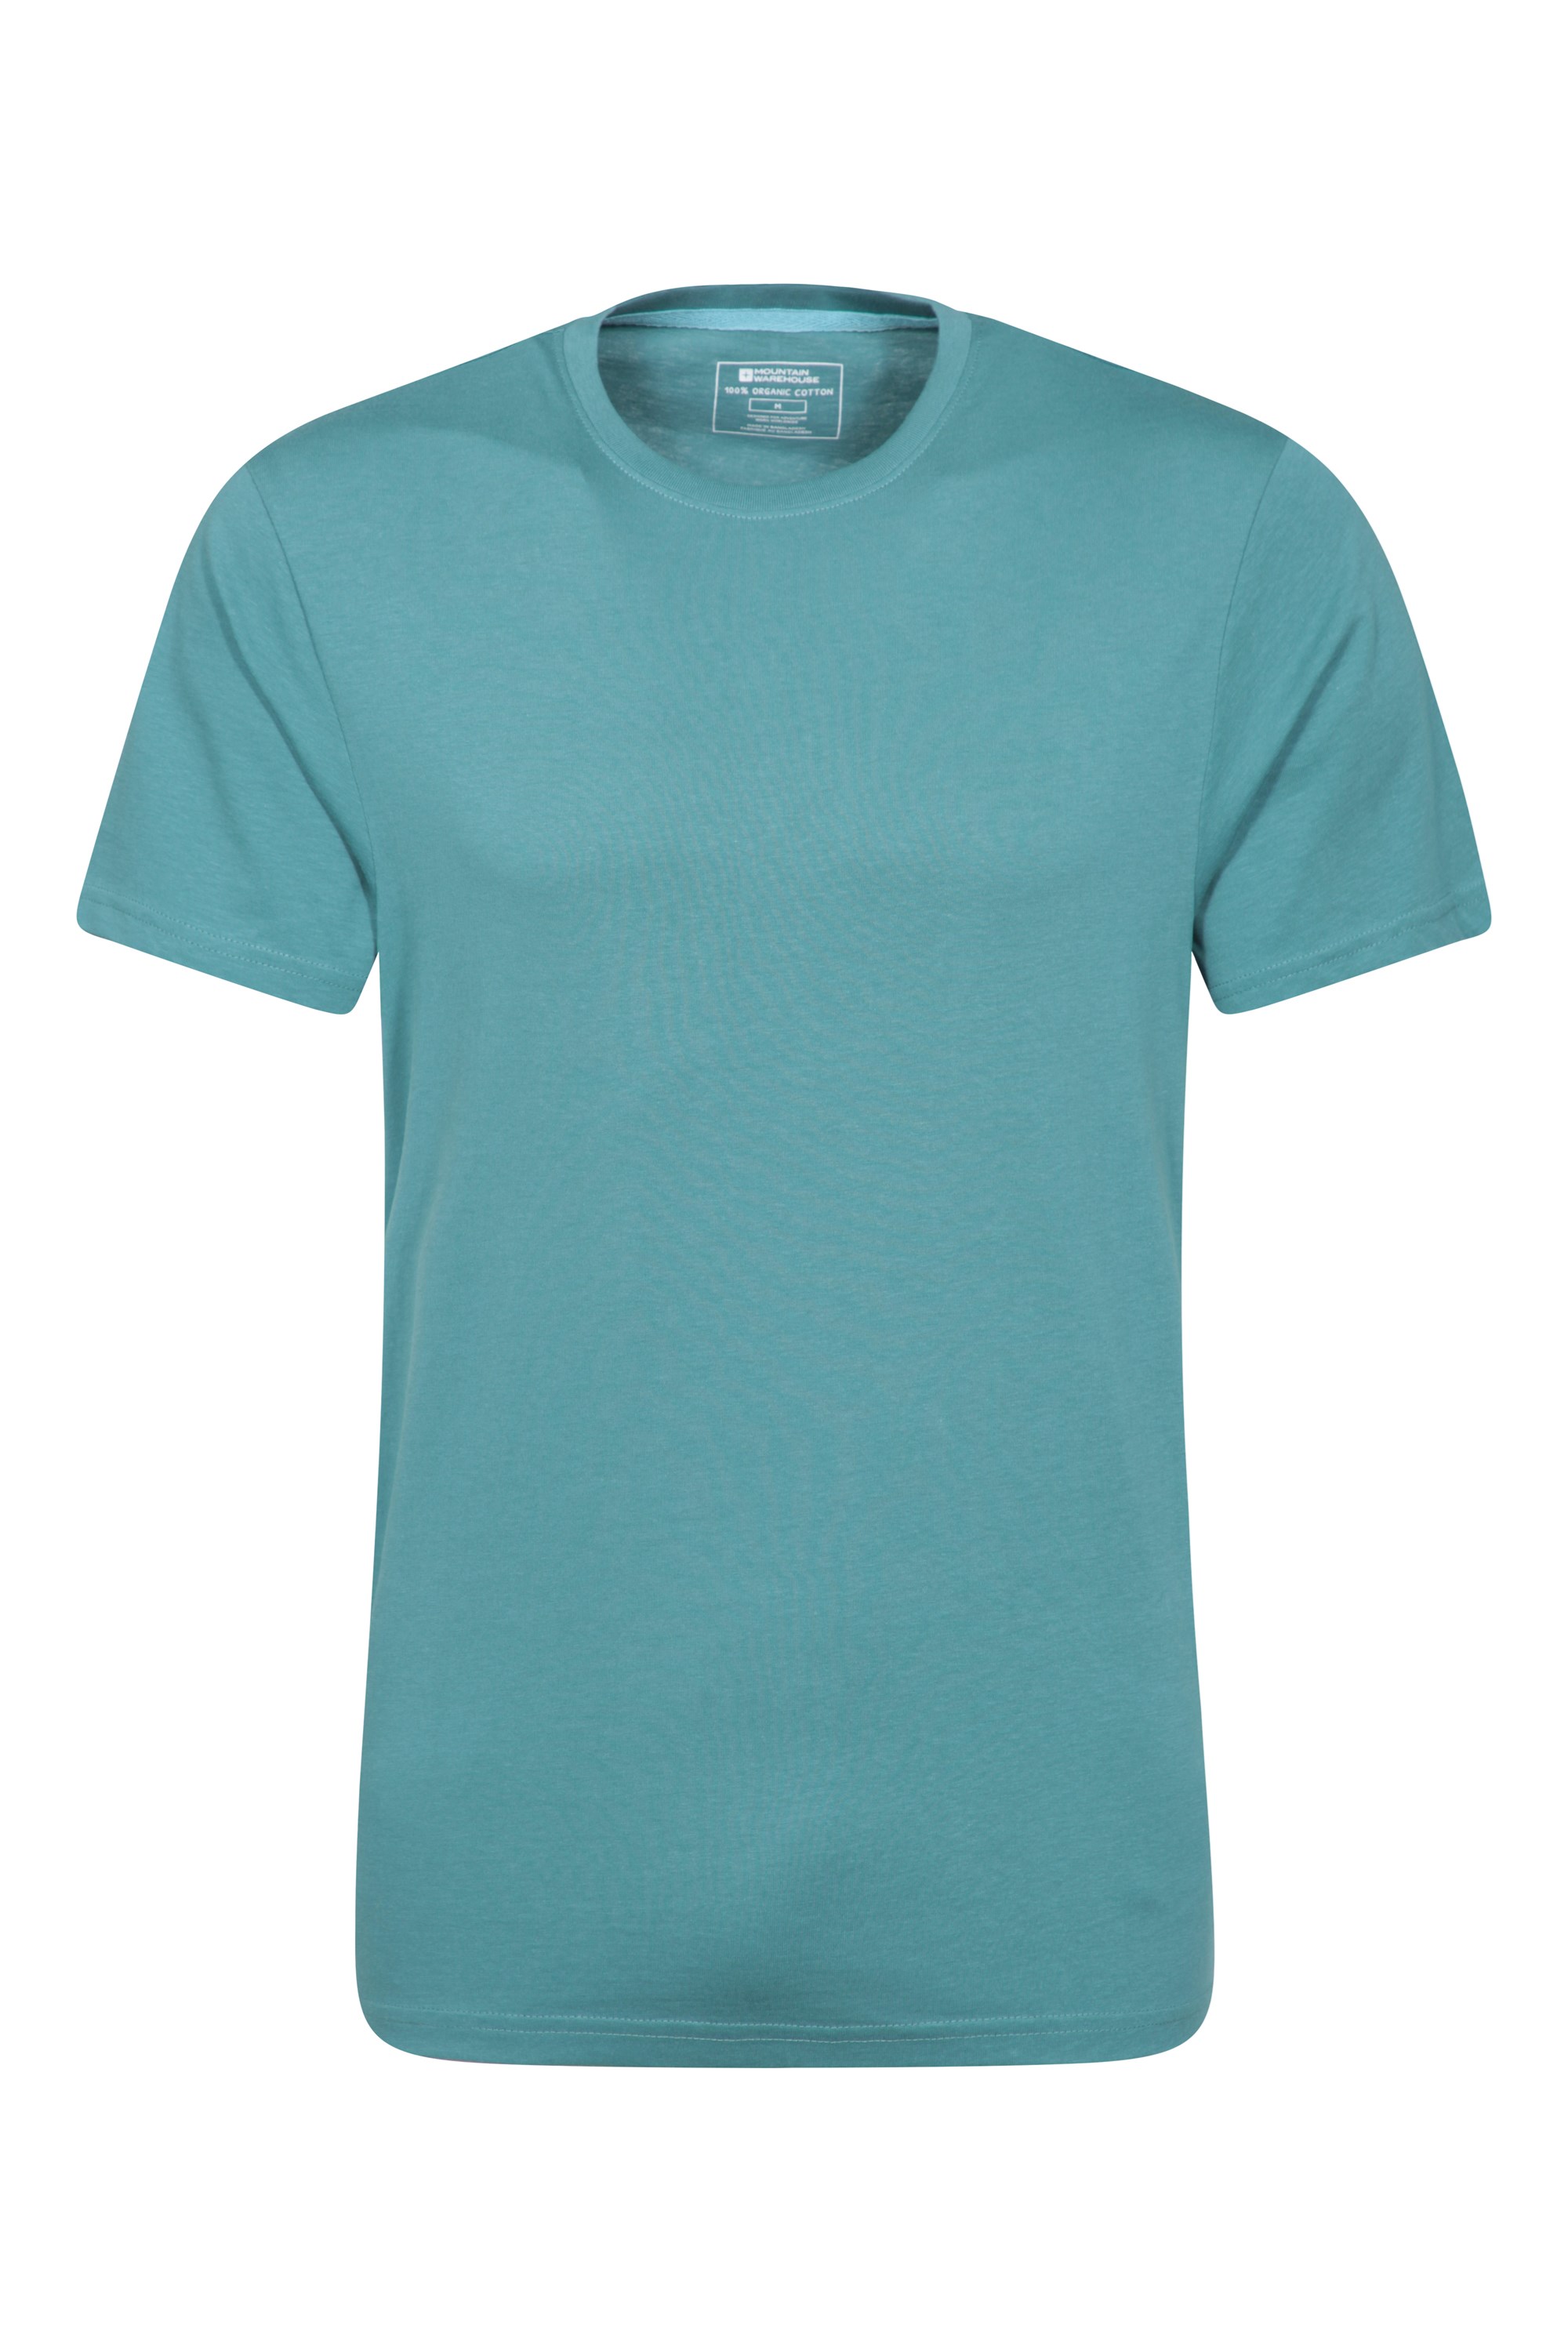 T-Shirt Eden Homme - Turquoise